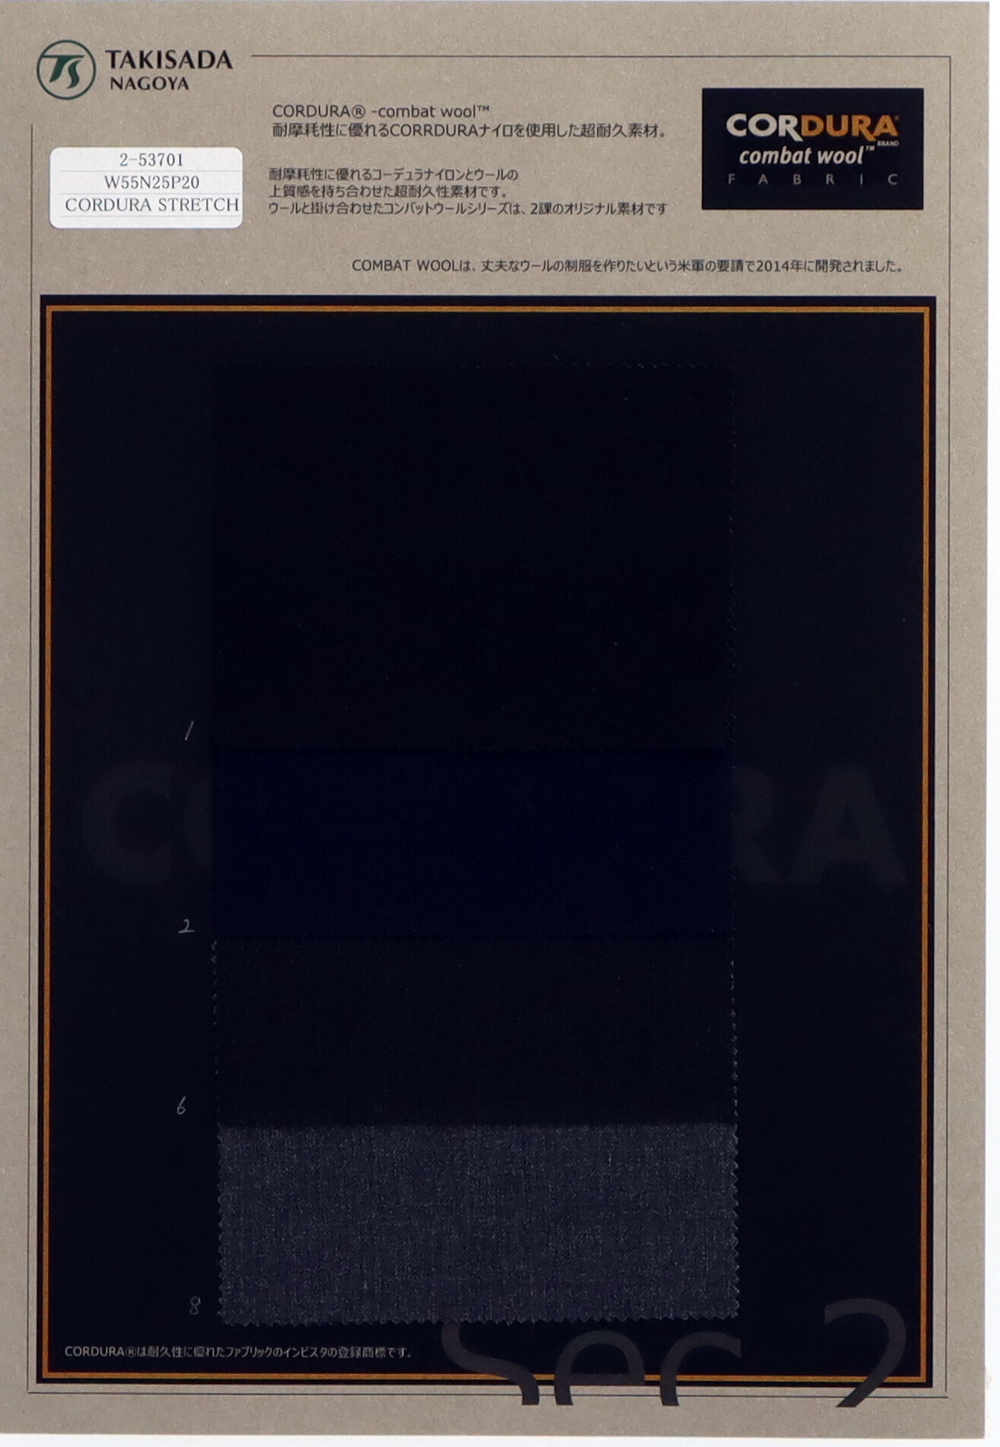 2-53701 CORDURA COMBATWOOL Stretch Gabardine[Textilgewebe] Takisada Nagoya